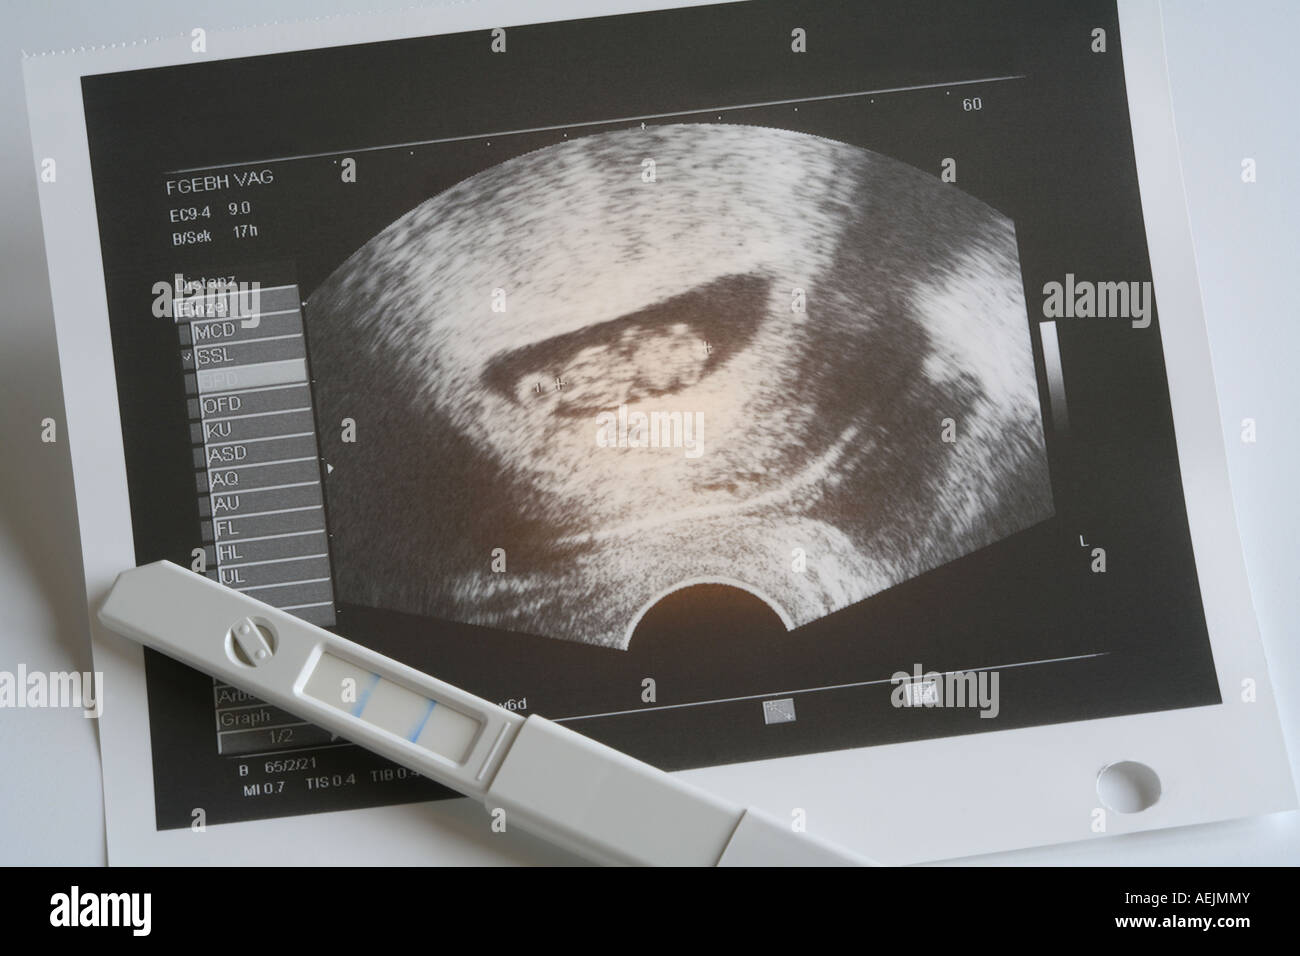 Positiven Schwangerschaftstest Ergebnis, Ultraschall Bild eines Fötus in der neunten Woche der Schwangerschaft Stockfoto